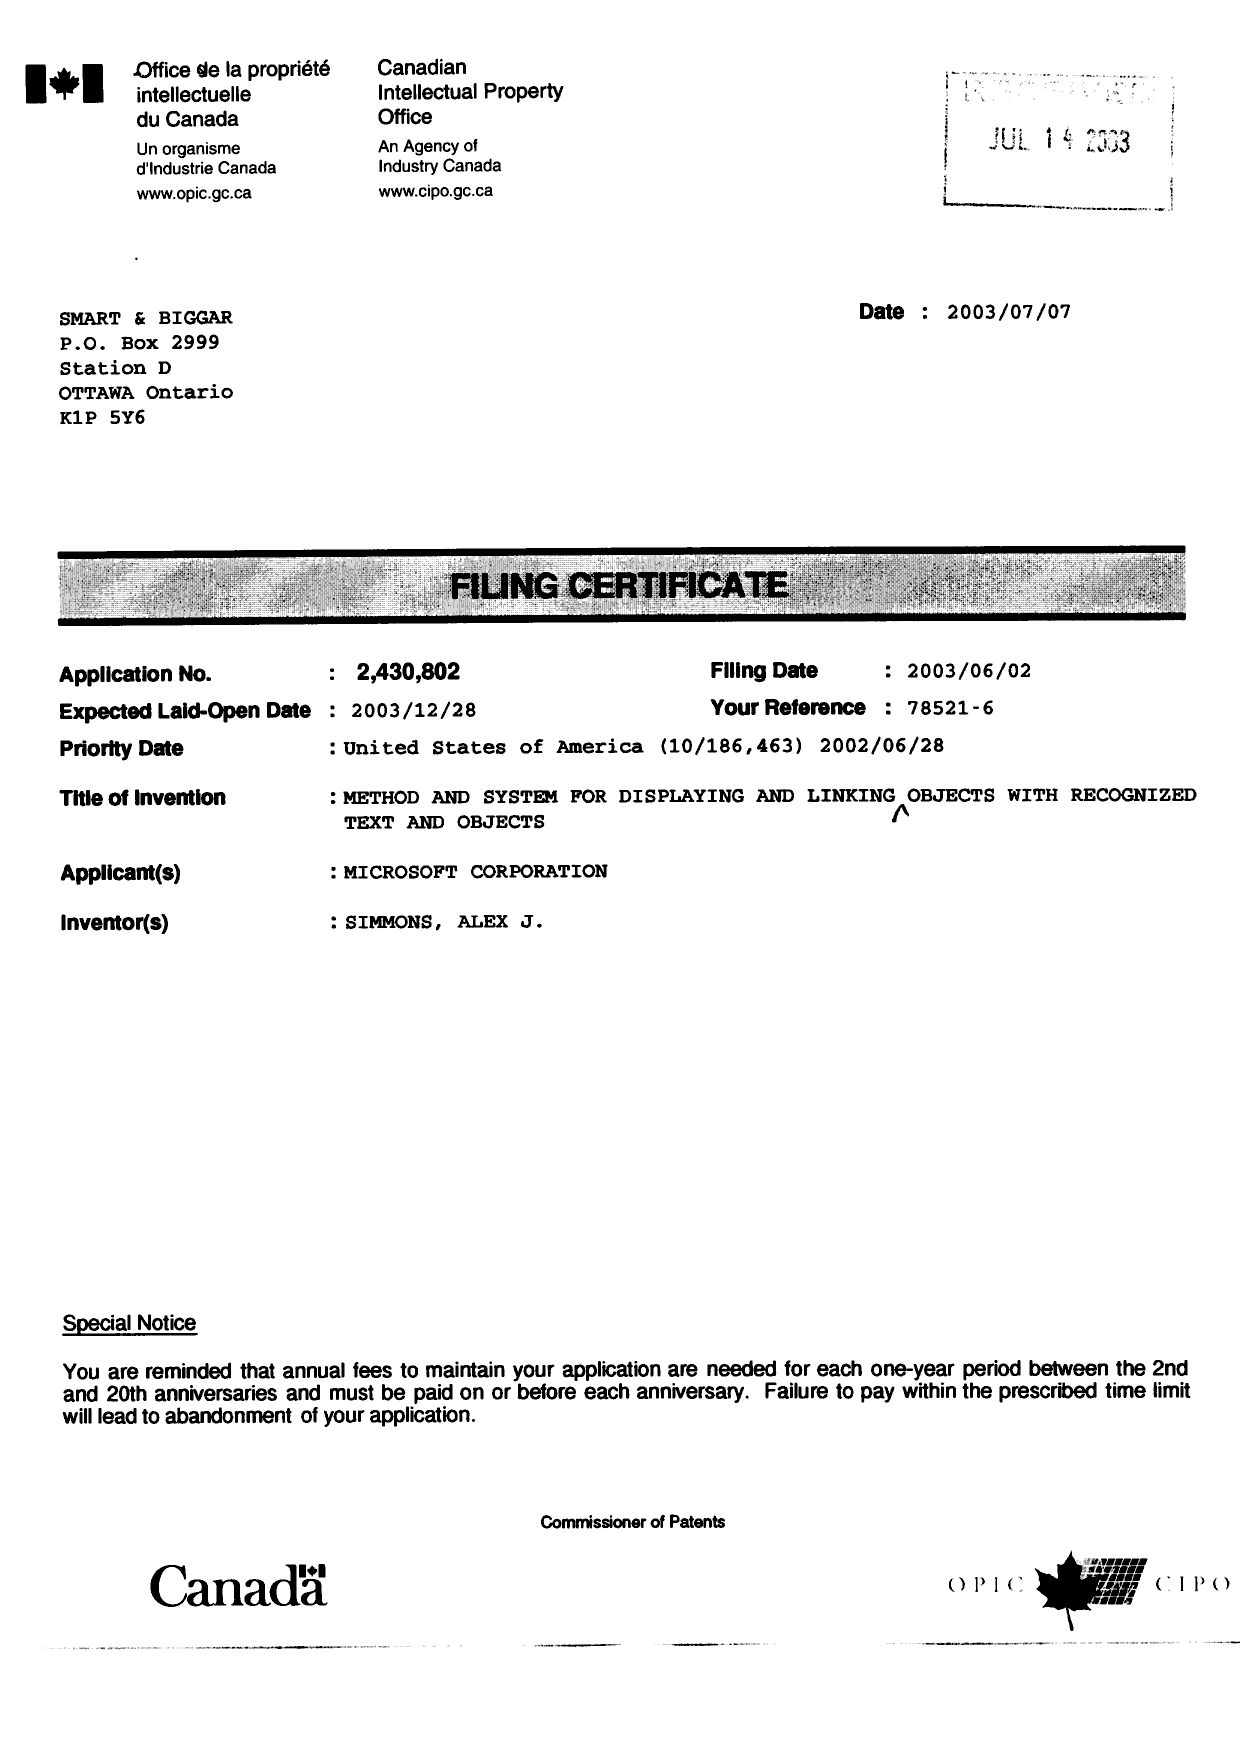 Canadian Patent Document 2430802. Correspondence 20030811. Image 2 of 2